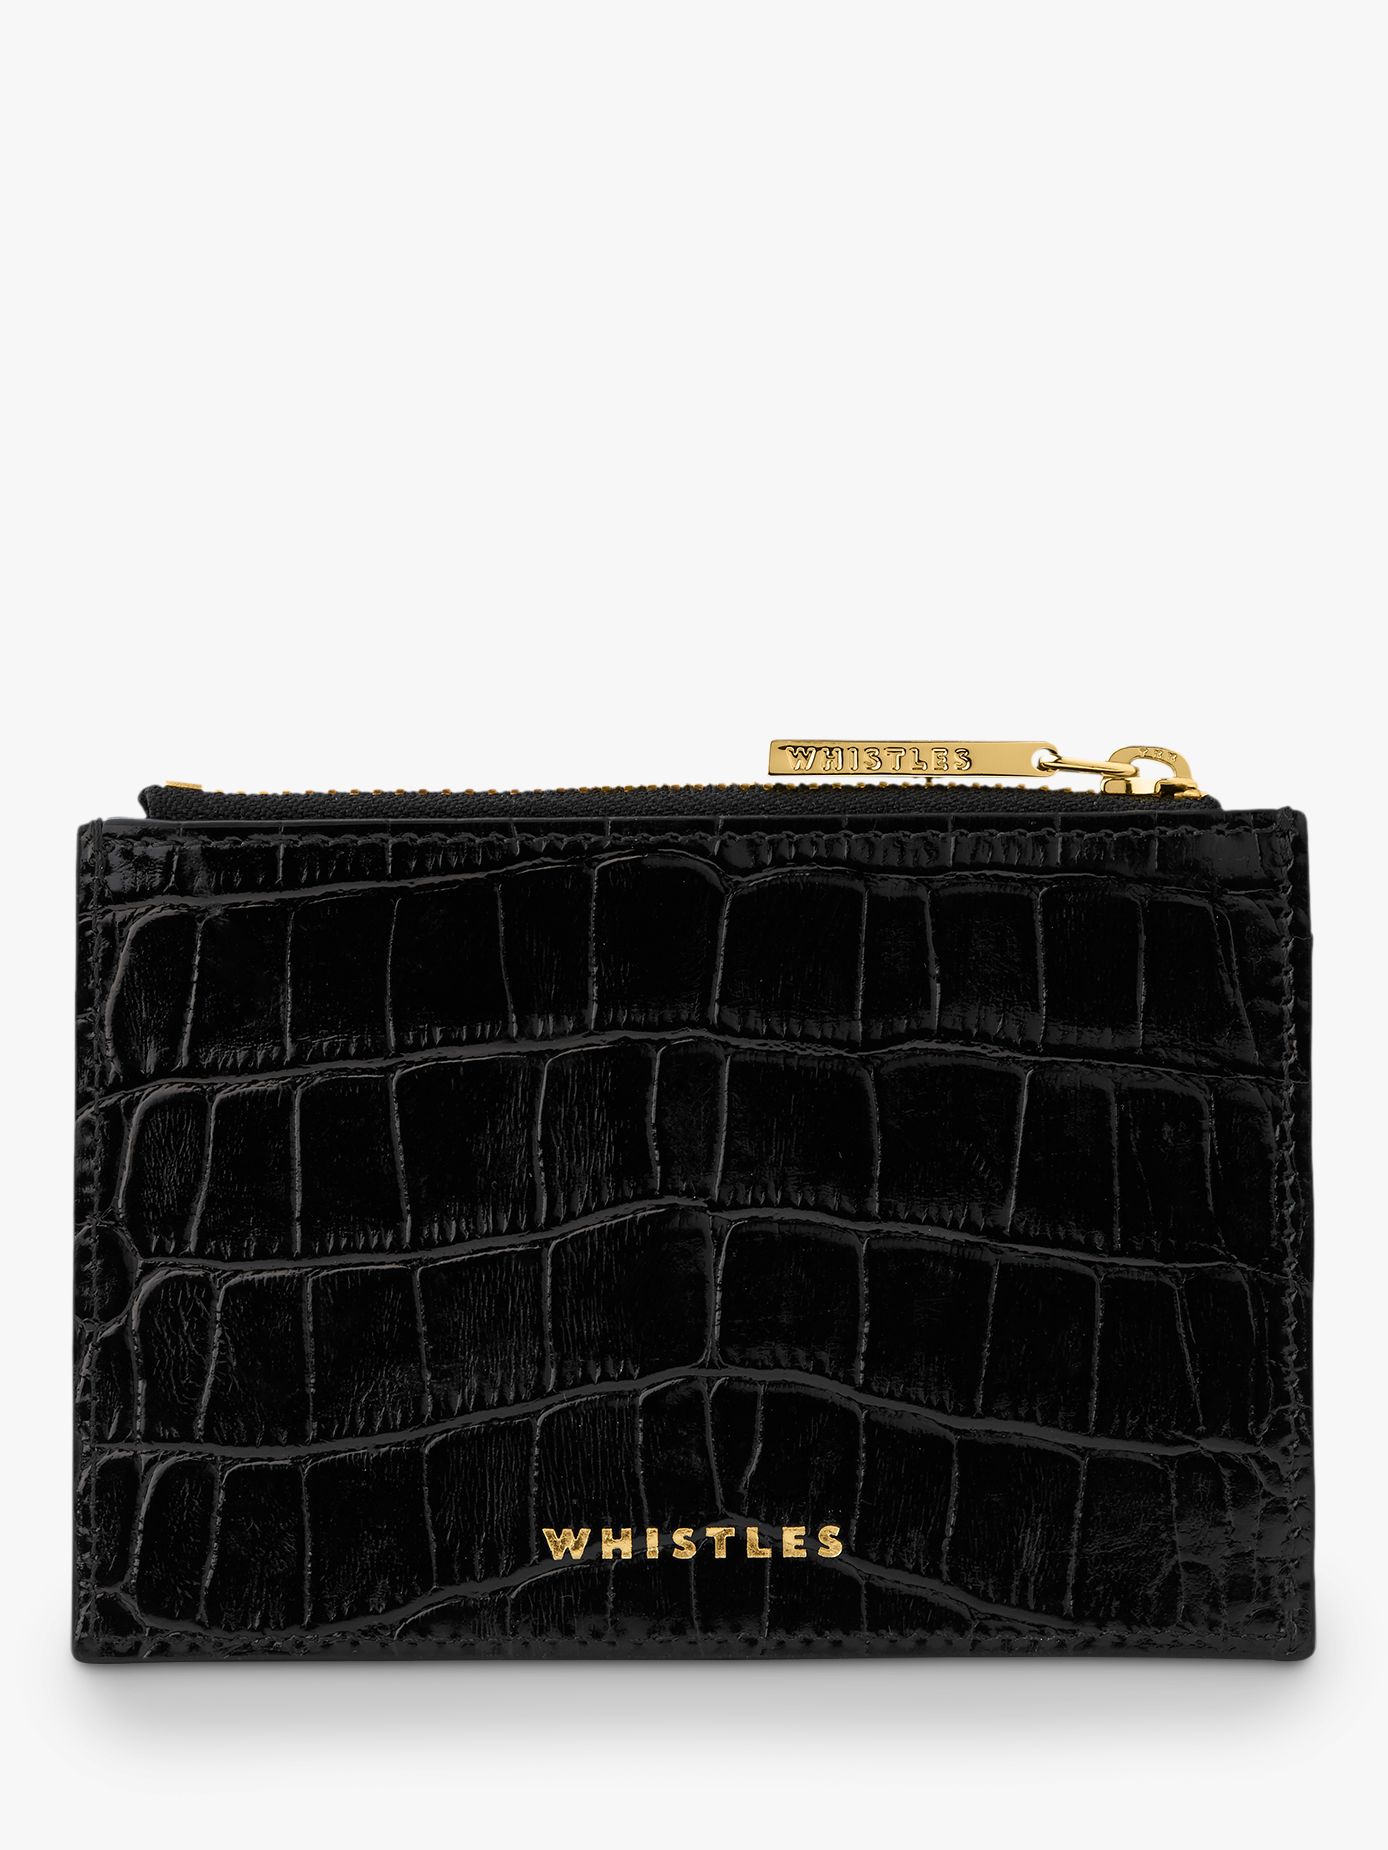 whistles croc purse